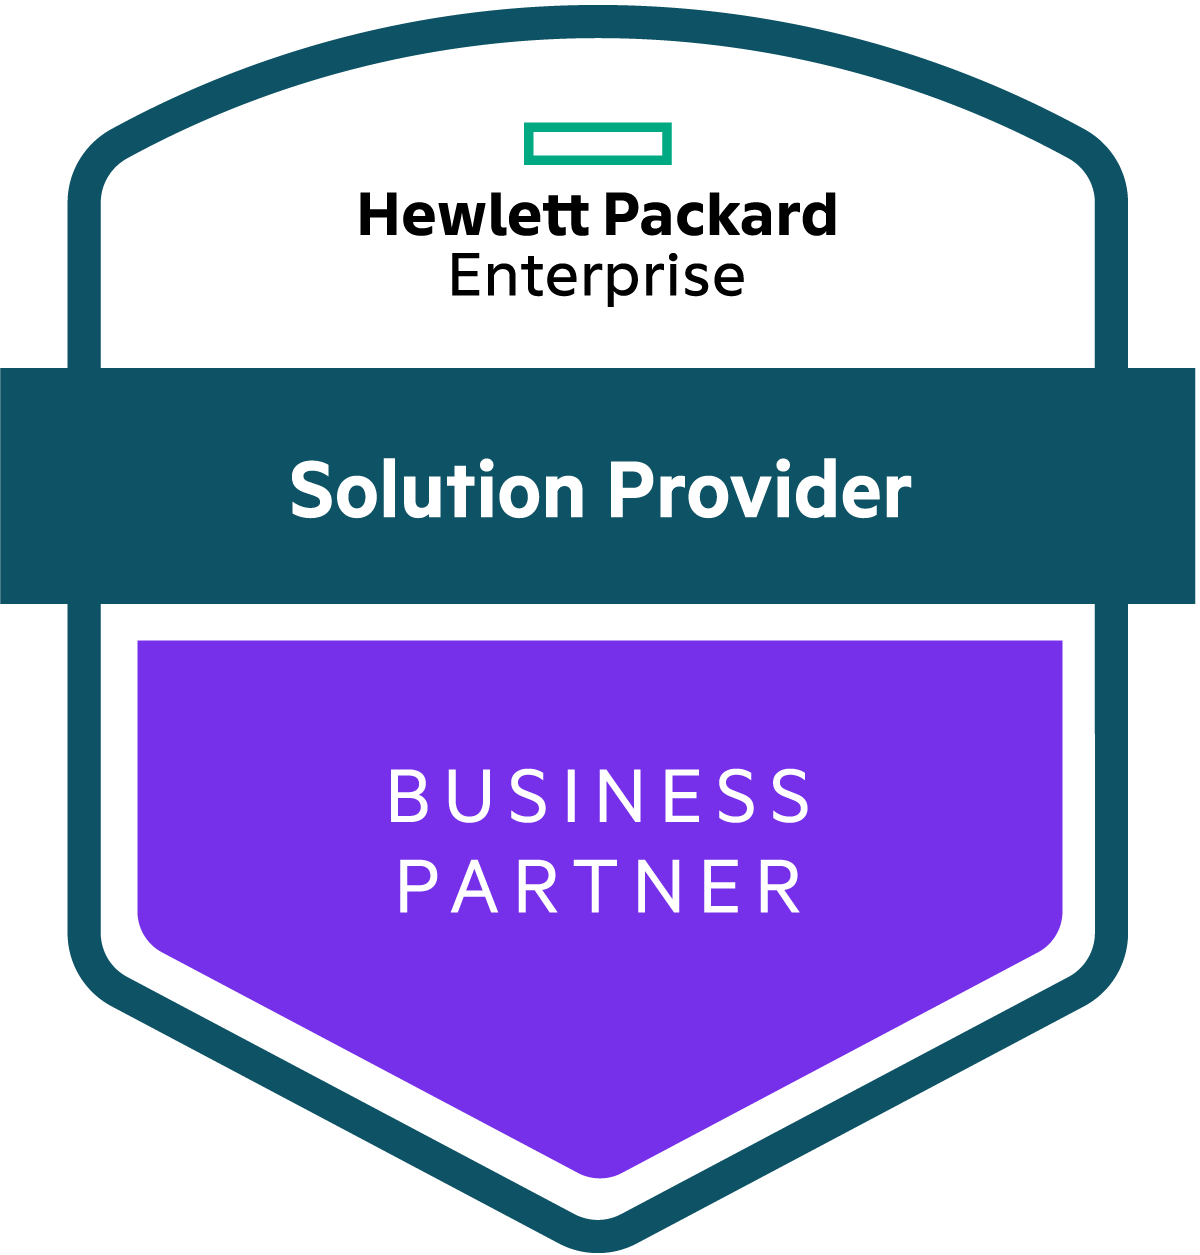 HPE Hewlett Packard Enterprise